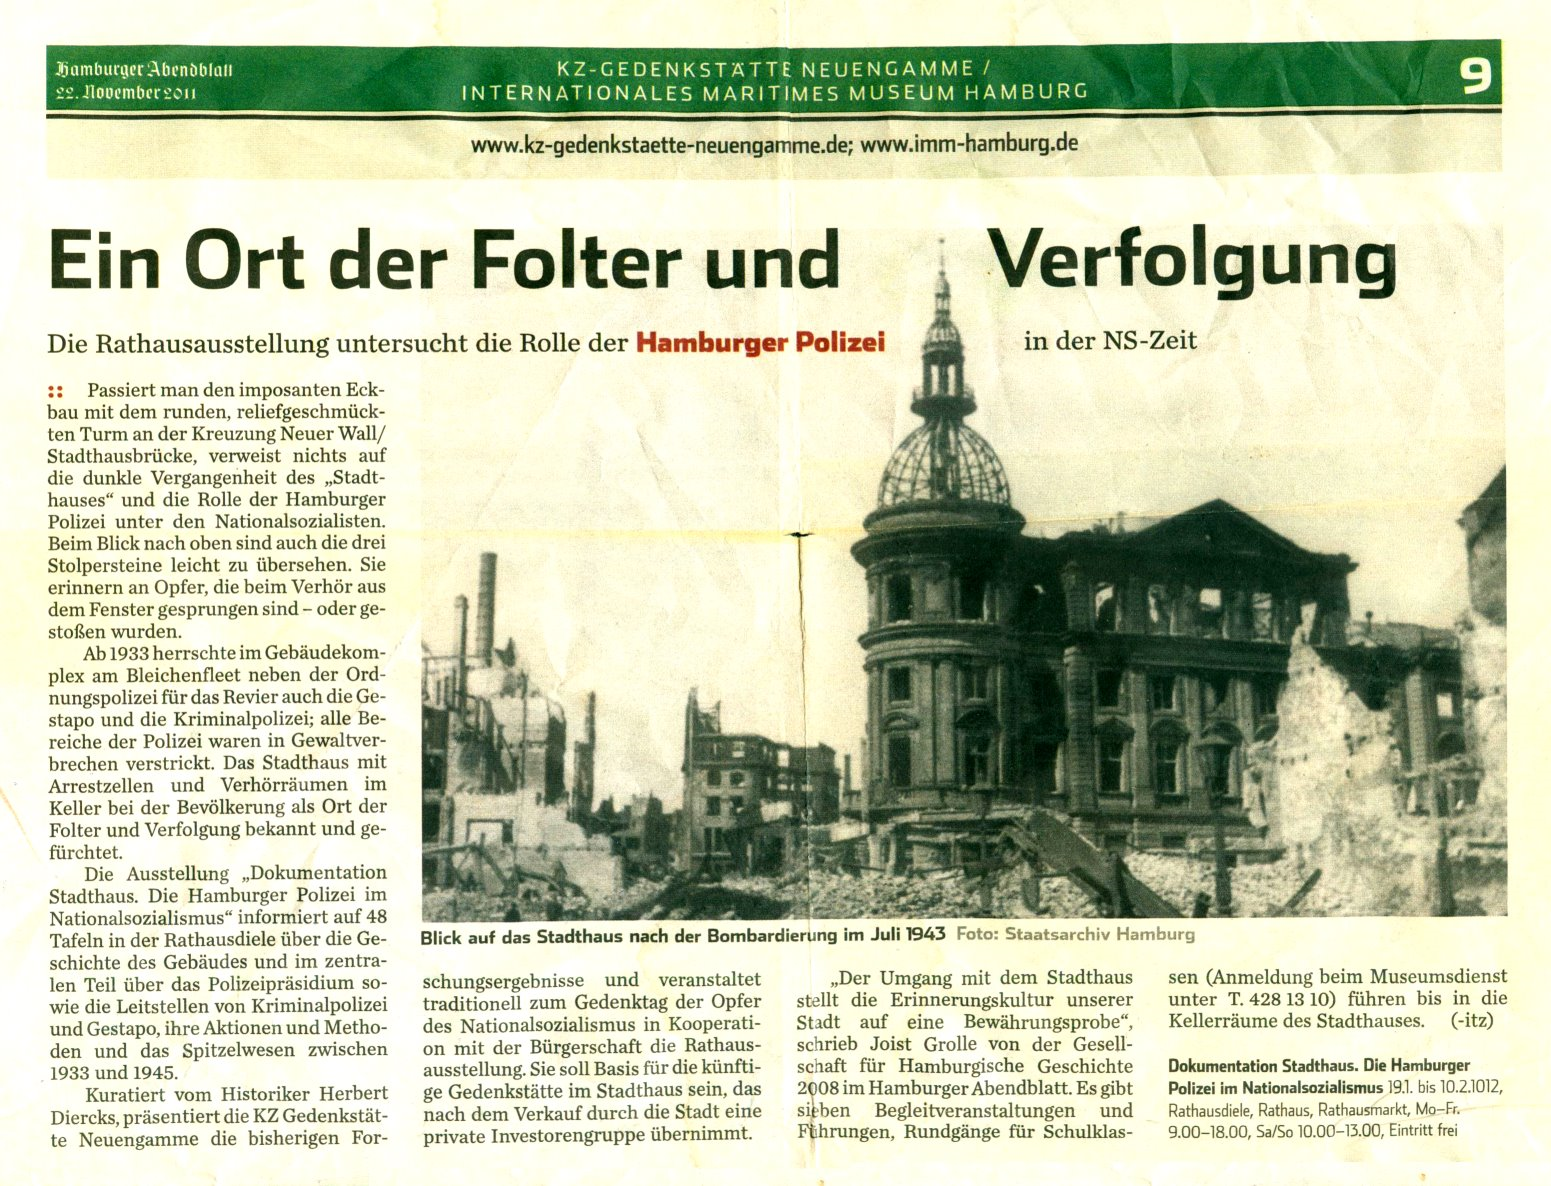 Bericht im Hamburger Abendblatt